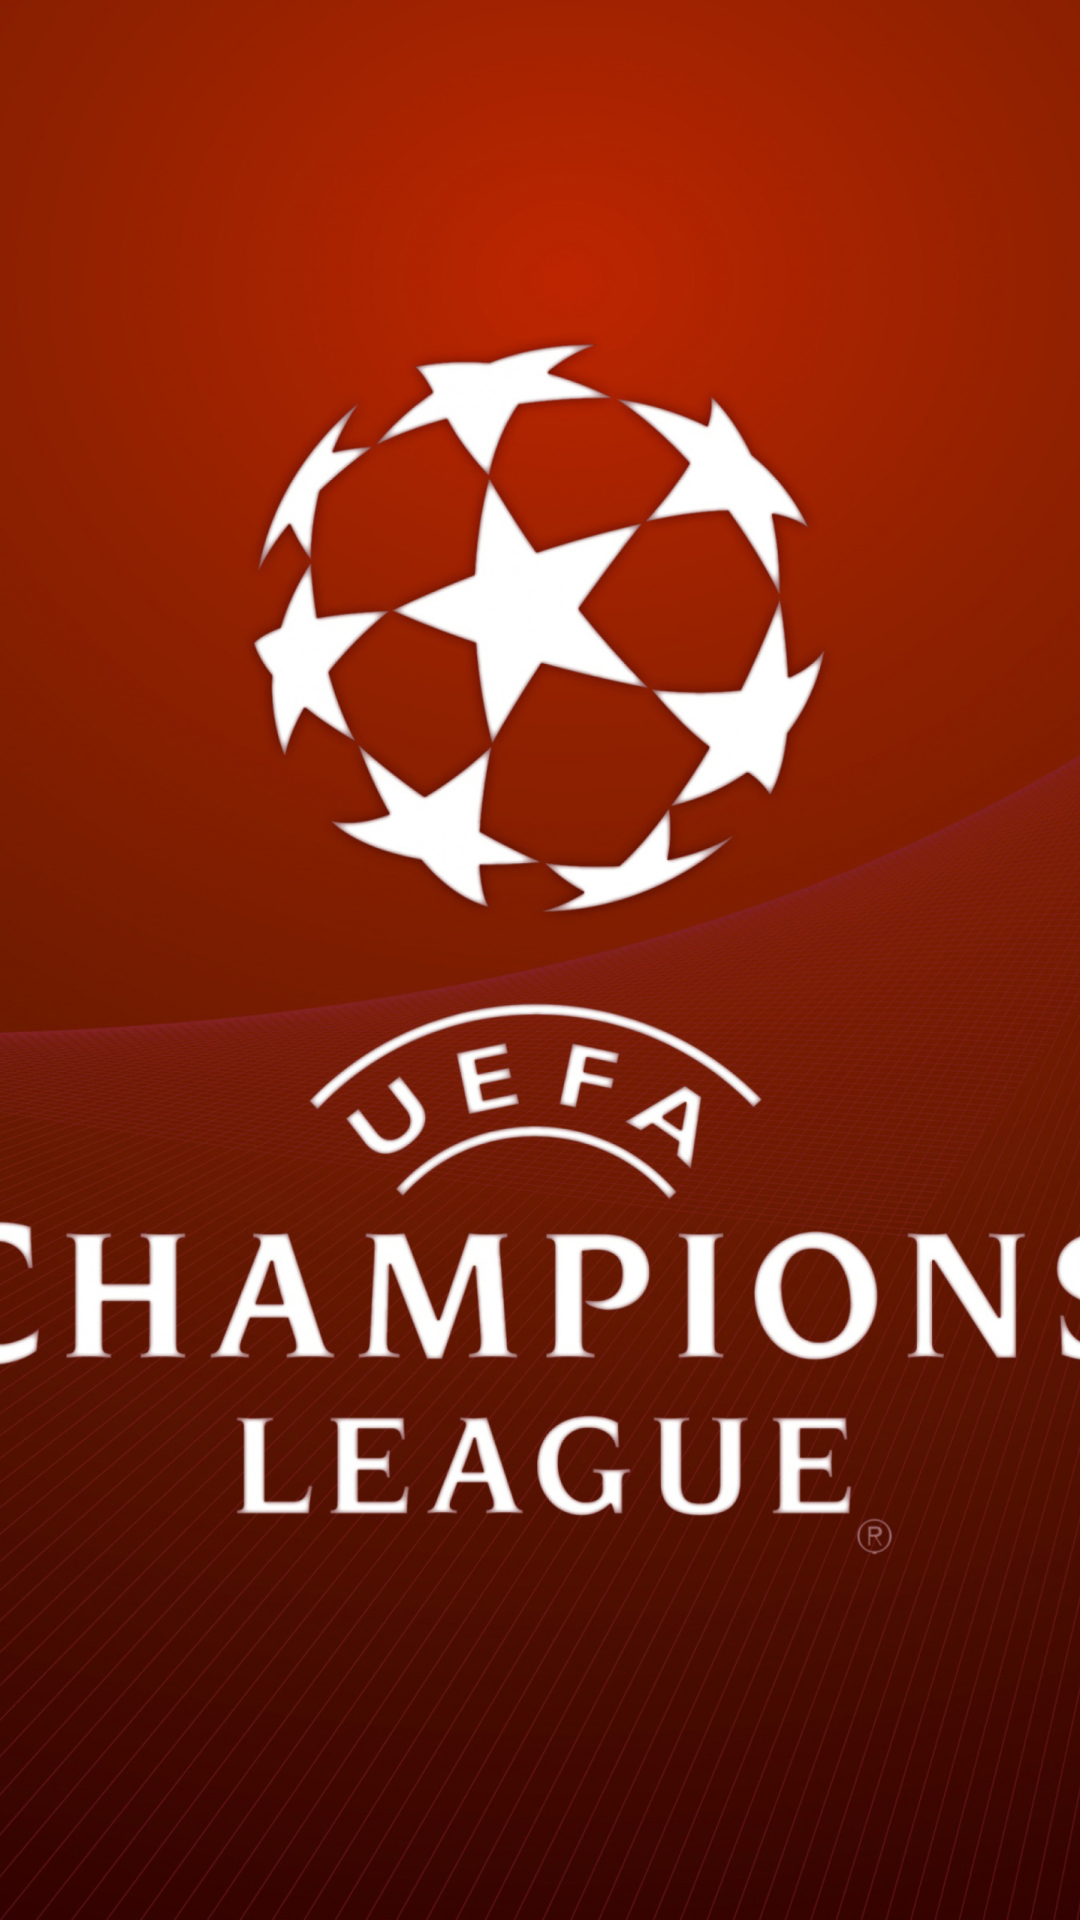 Uefa Champions League wallpaper 1080x1920